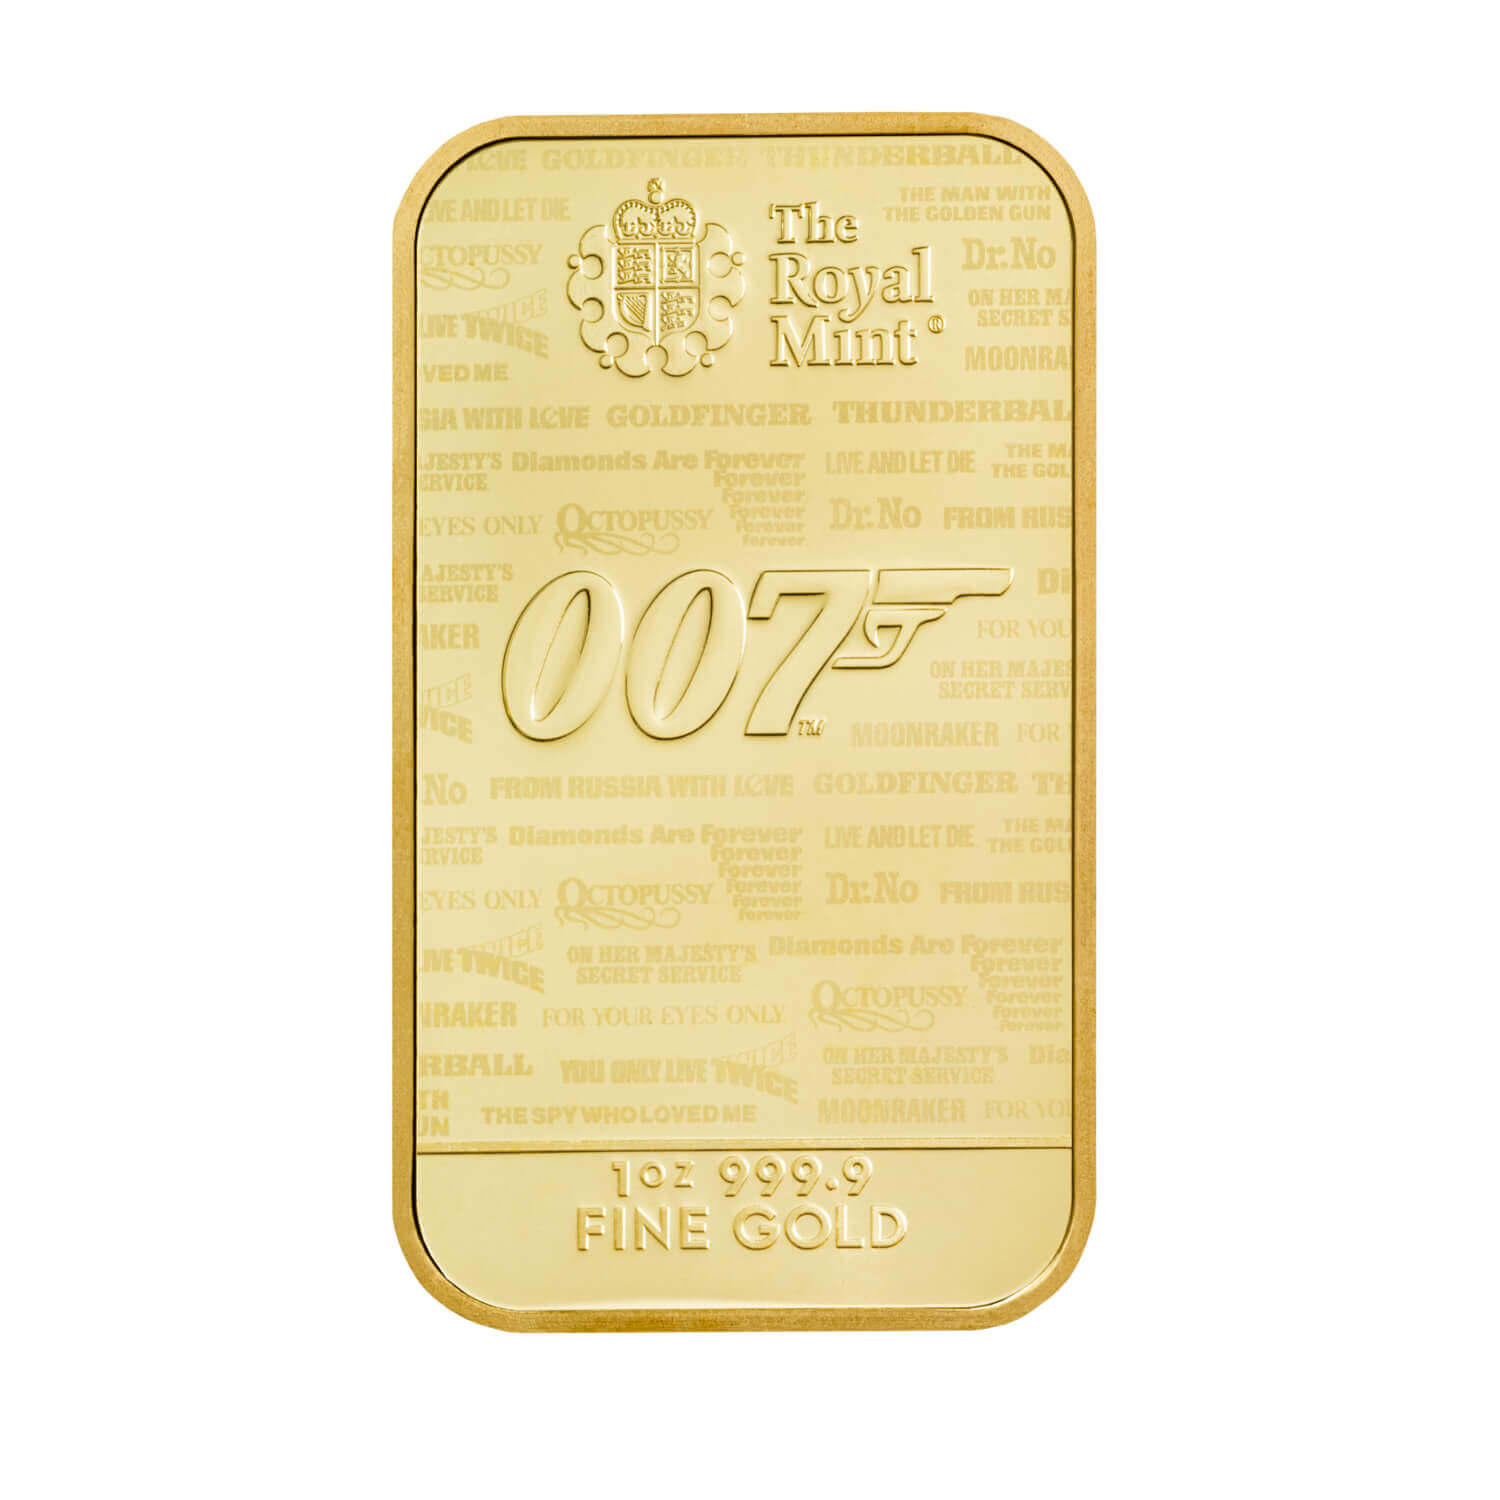 https://www.royalmint.com/globalassets/the-royal-mint/images/pages/invest/bullion/bullion-bars/james-bond-bars/james_bond_1oz_gold_bullion_bar_side_1-1500x1500-f3a2c67-1.jpg